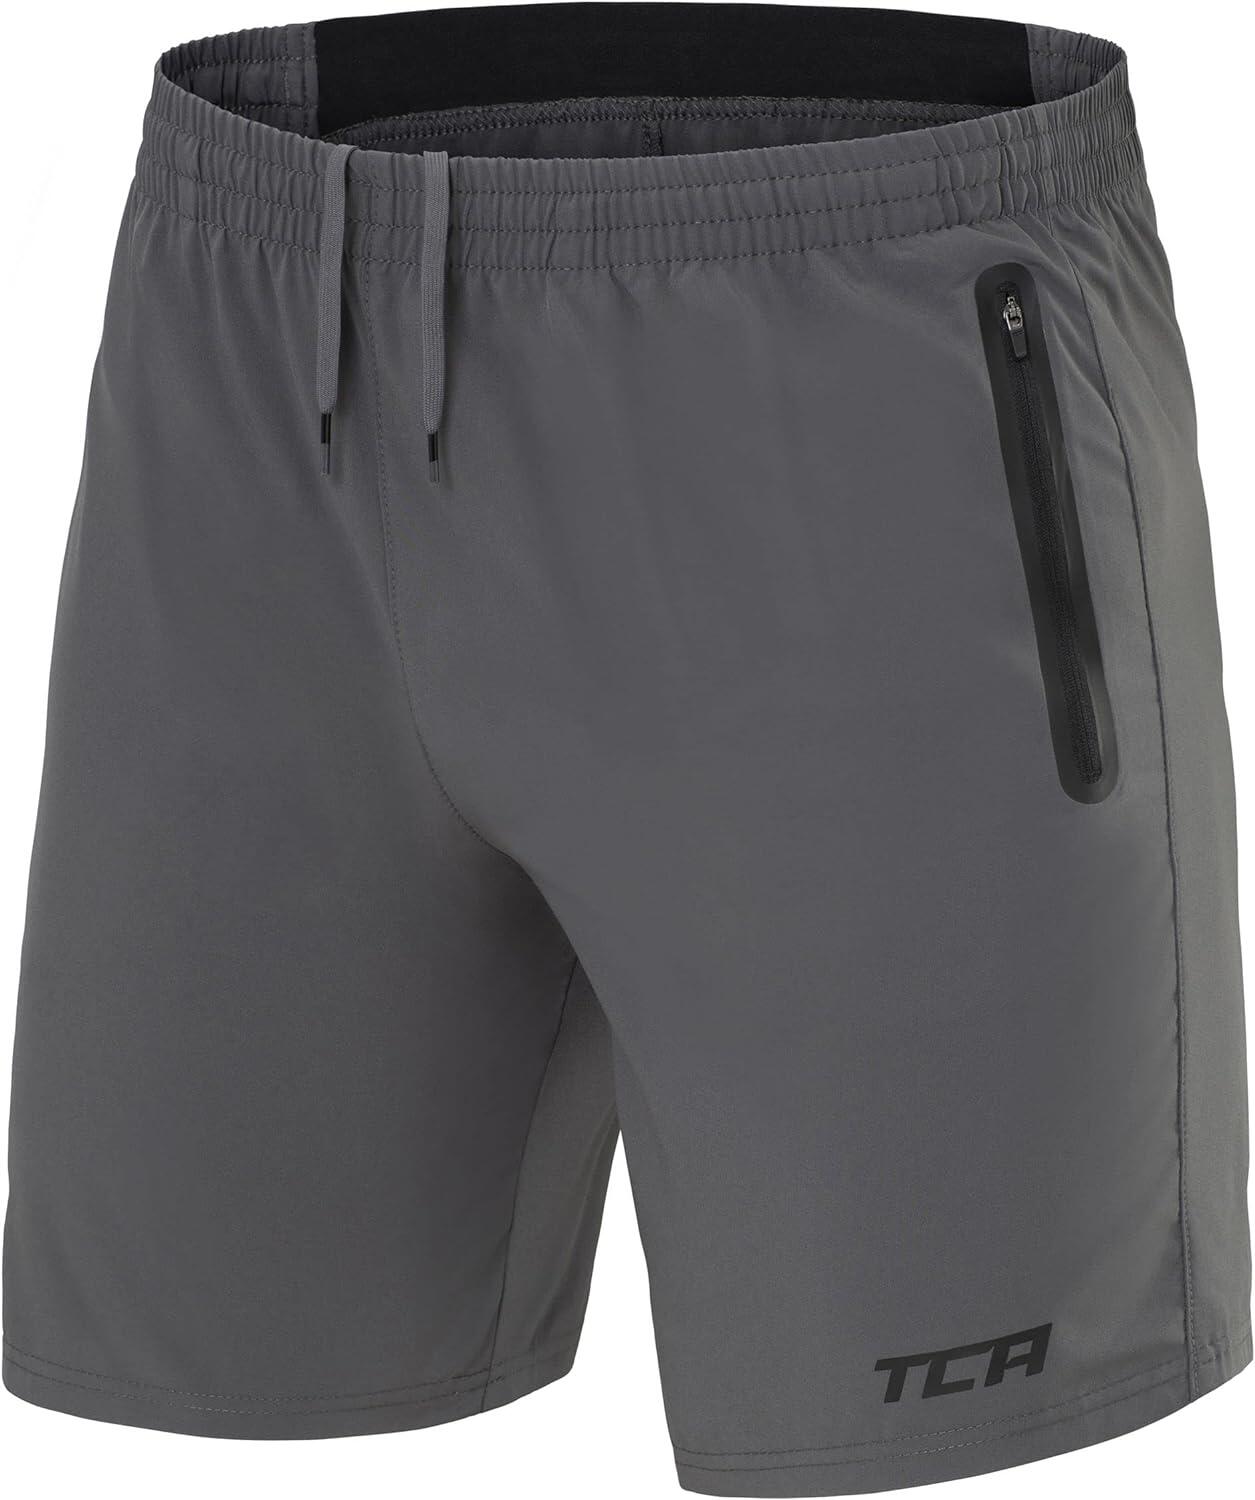 TCA Men's Elite Tech Lightweight Running Shorts with Zip Pockets - Asphalt